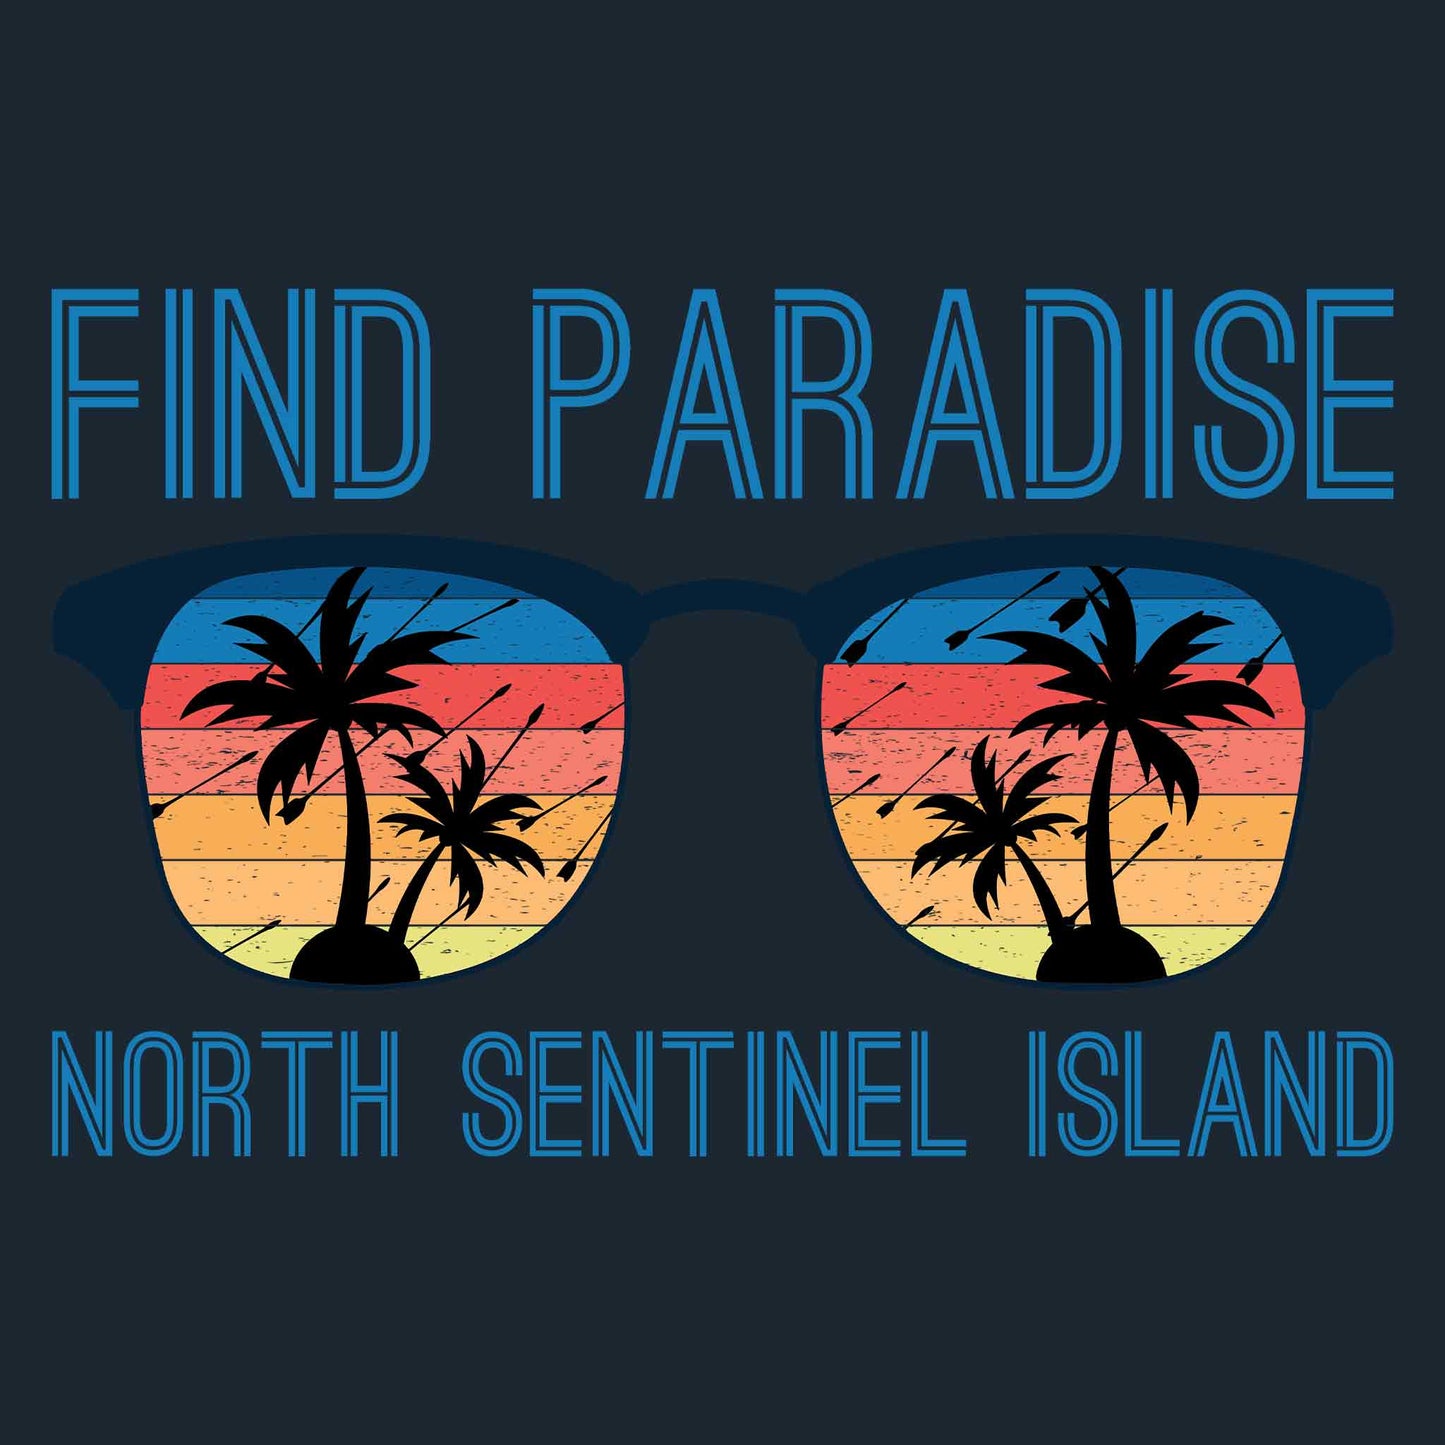 Find Paradise T-Shirt